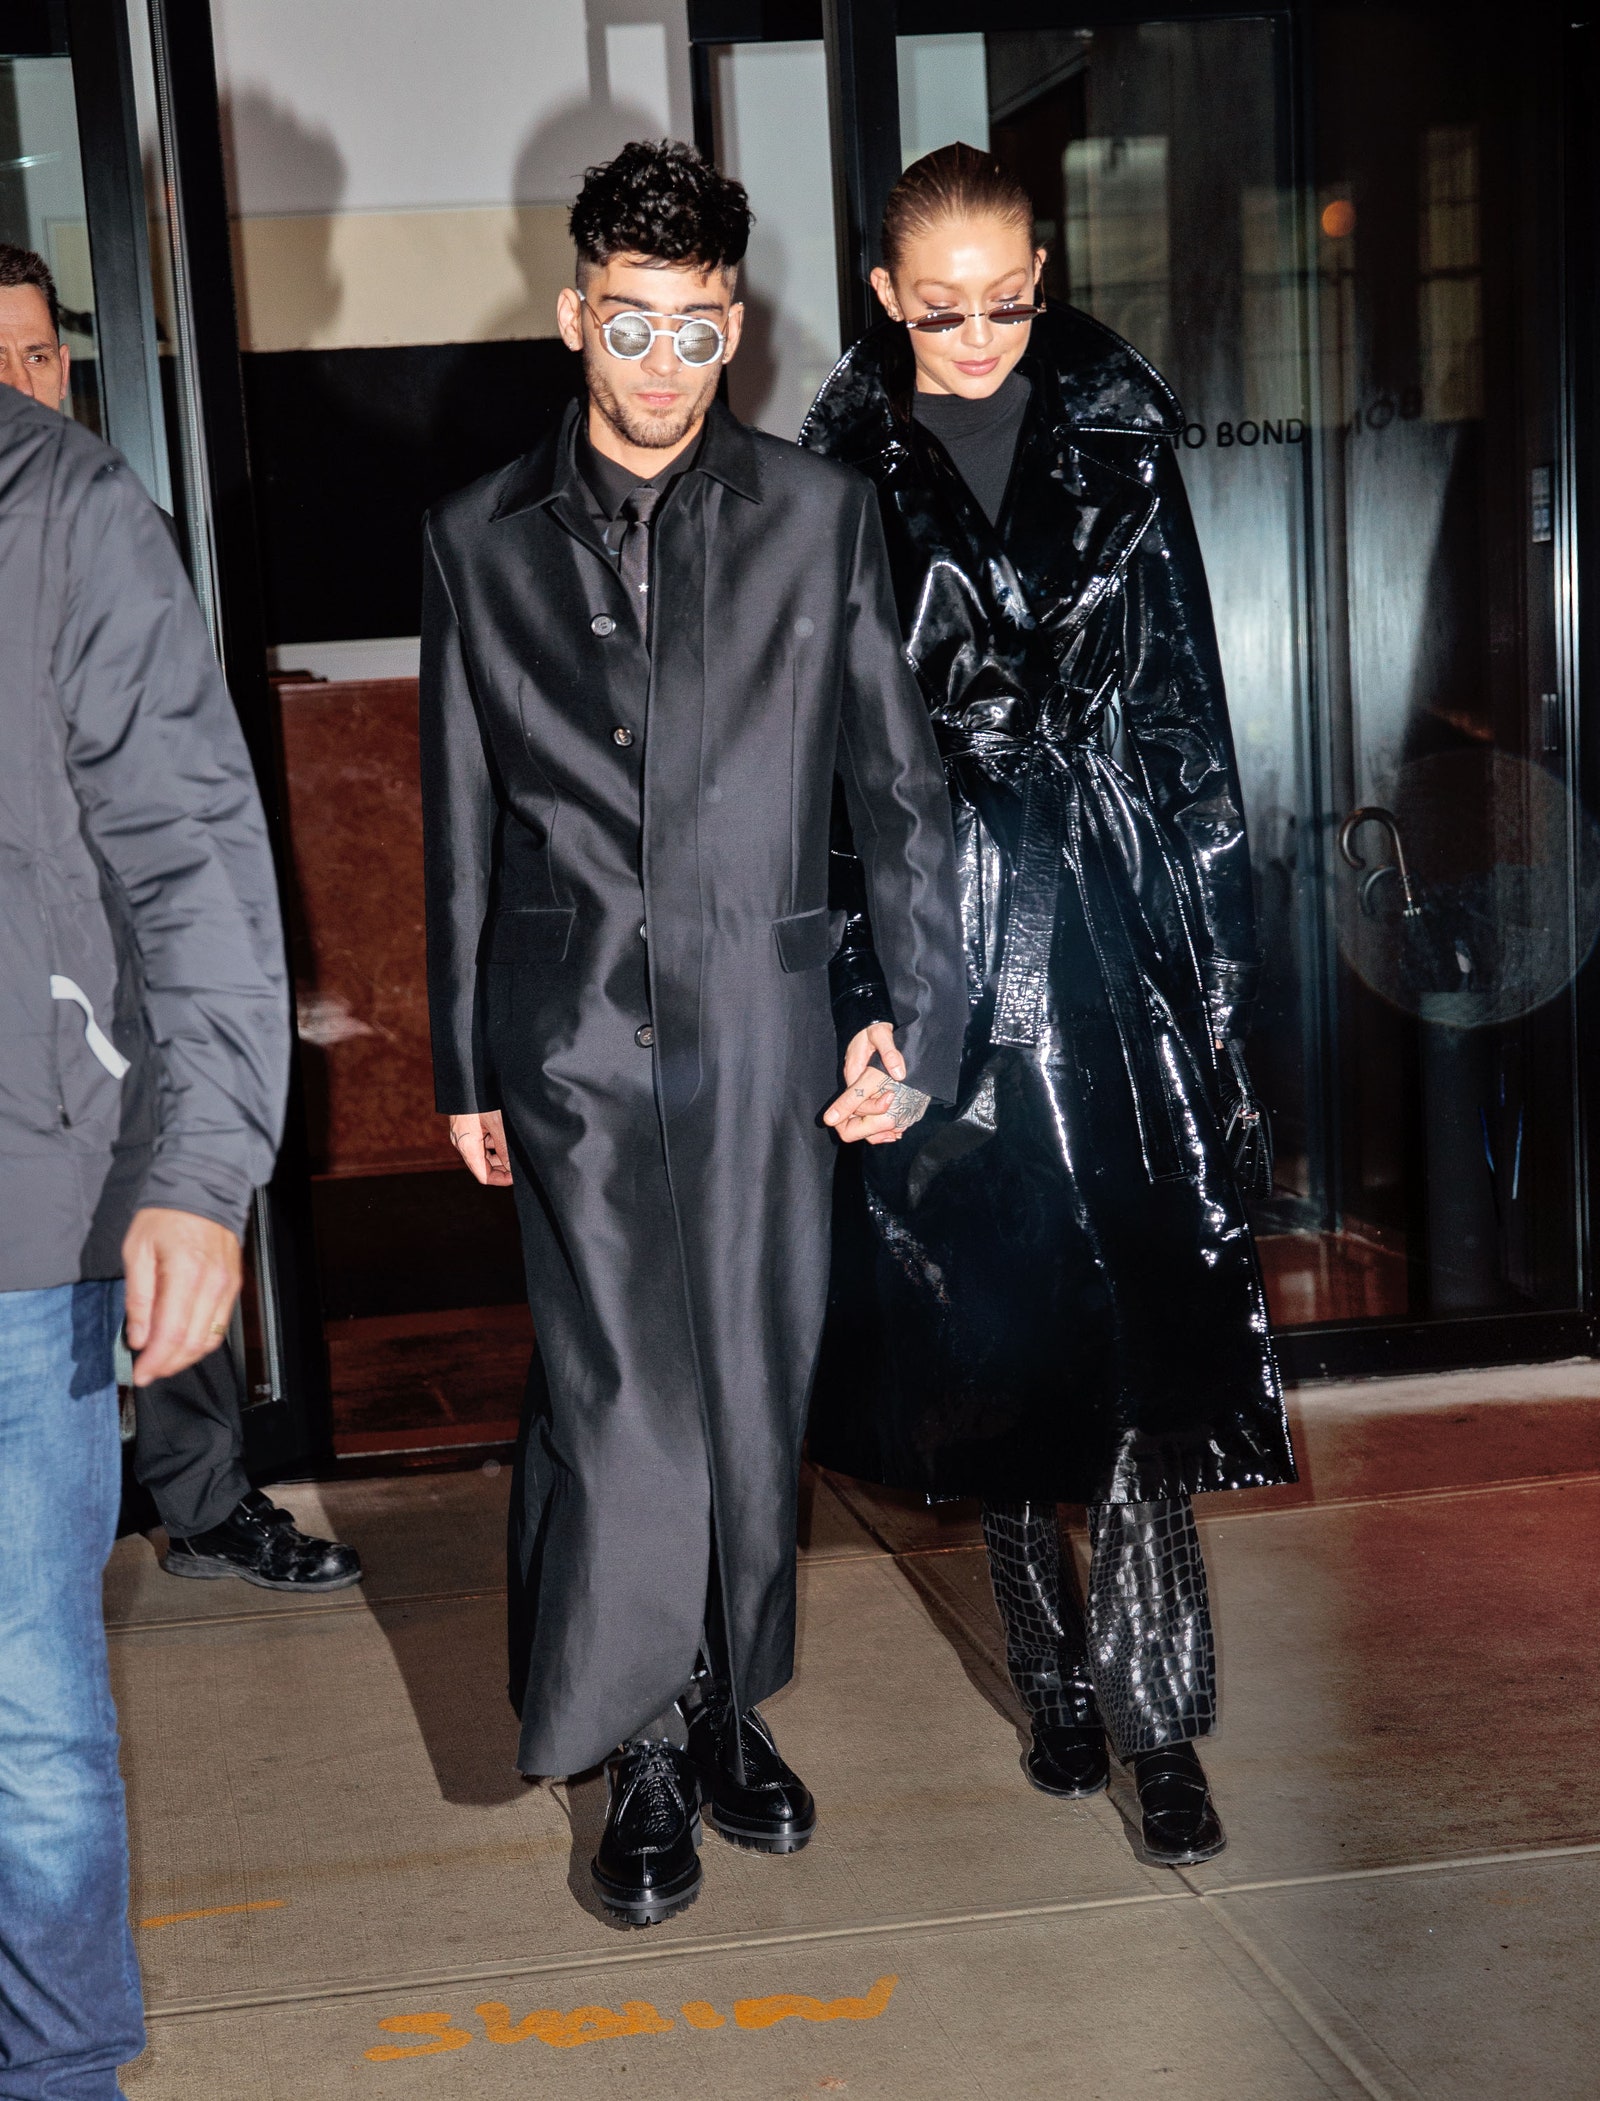 Gigi Hadid and Zayn Malik with Matrix-inspired looks